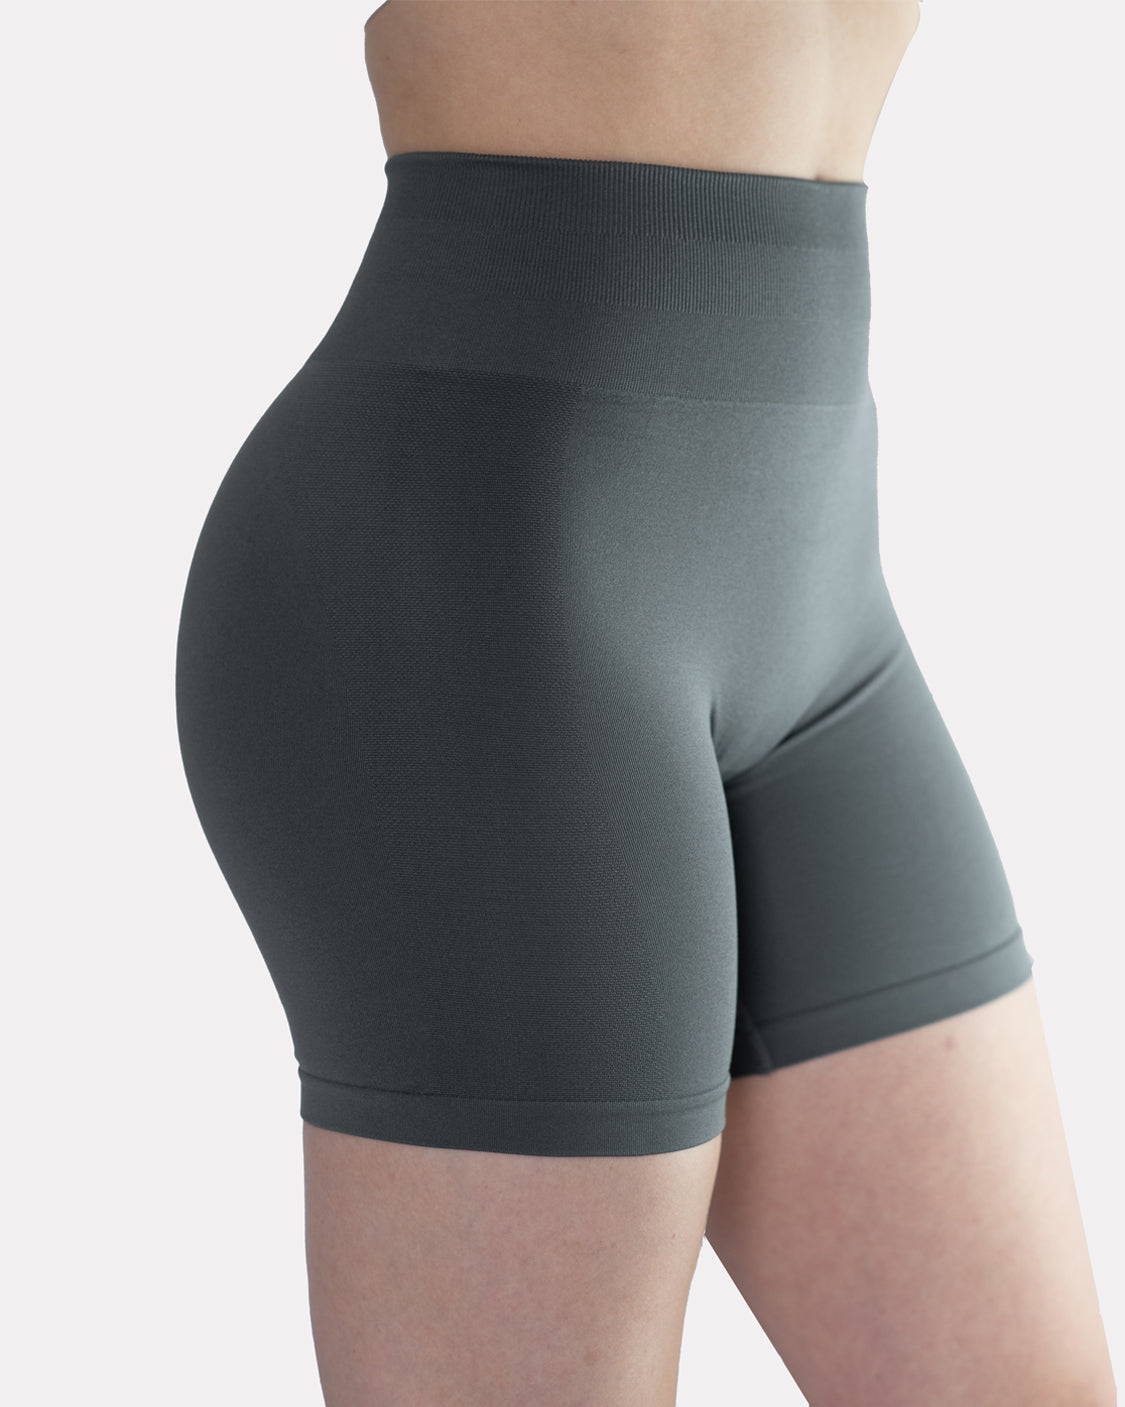 Aurola Shorts - $9 (64% Off Retail) - From Kyra